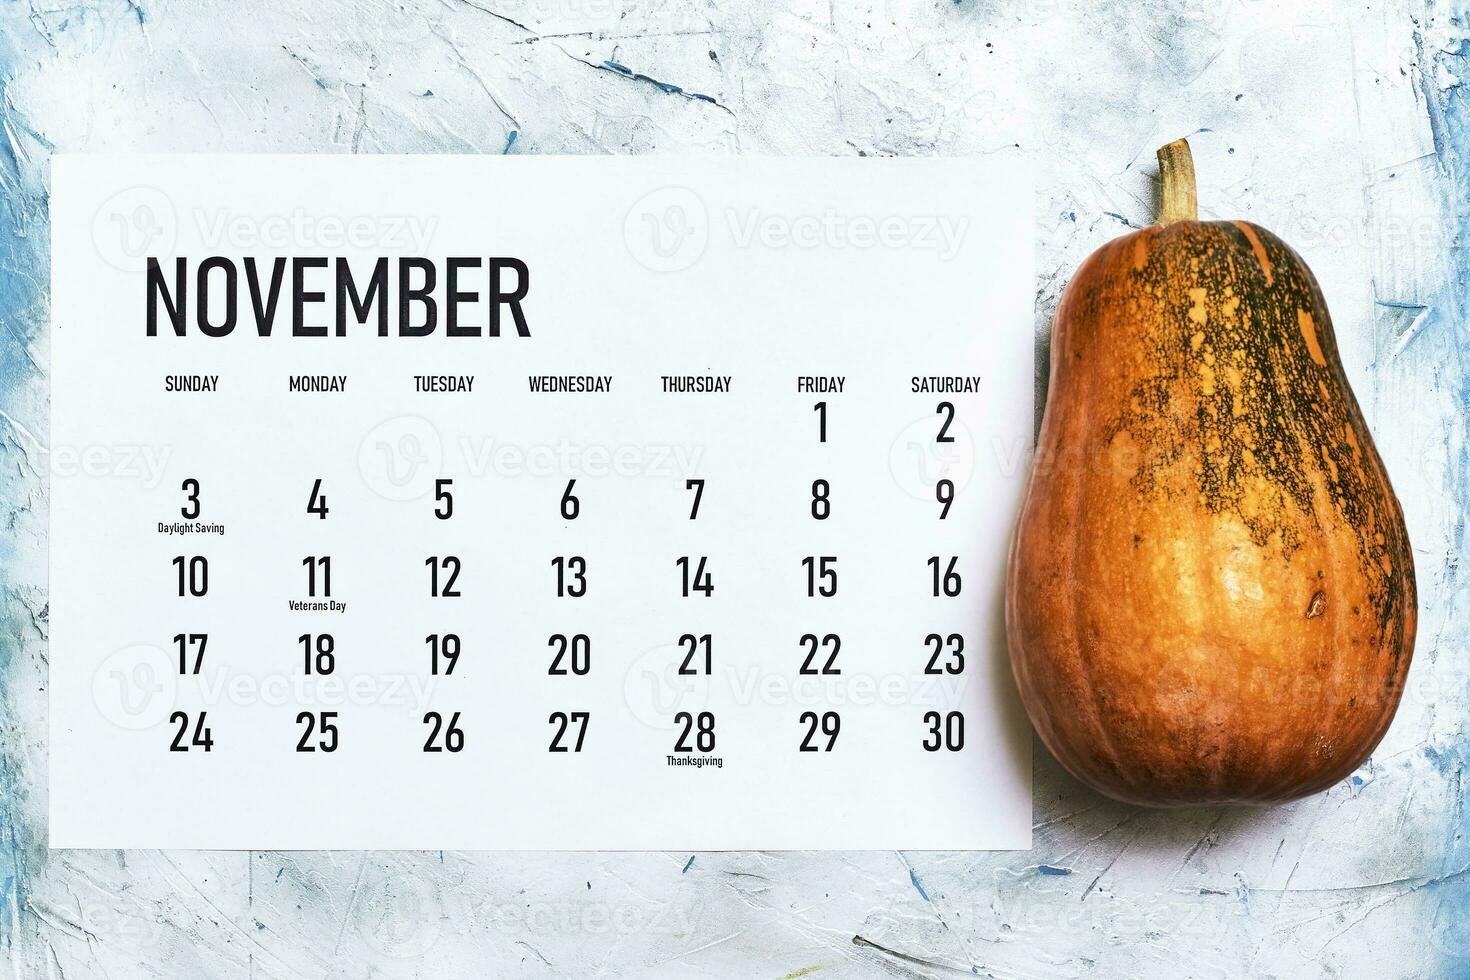 November 2020 monthly calendar on wood photo